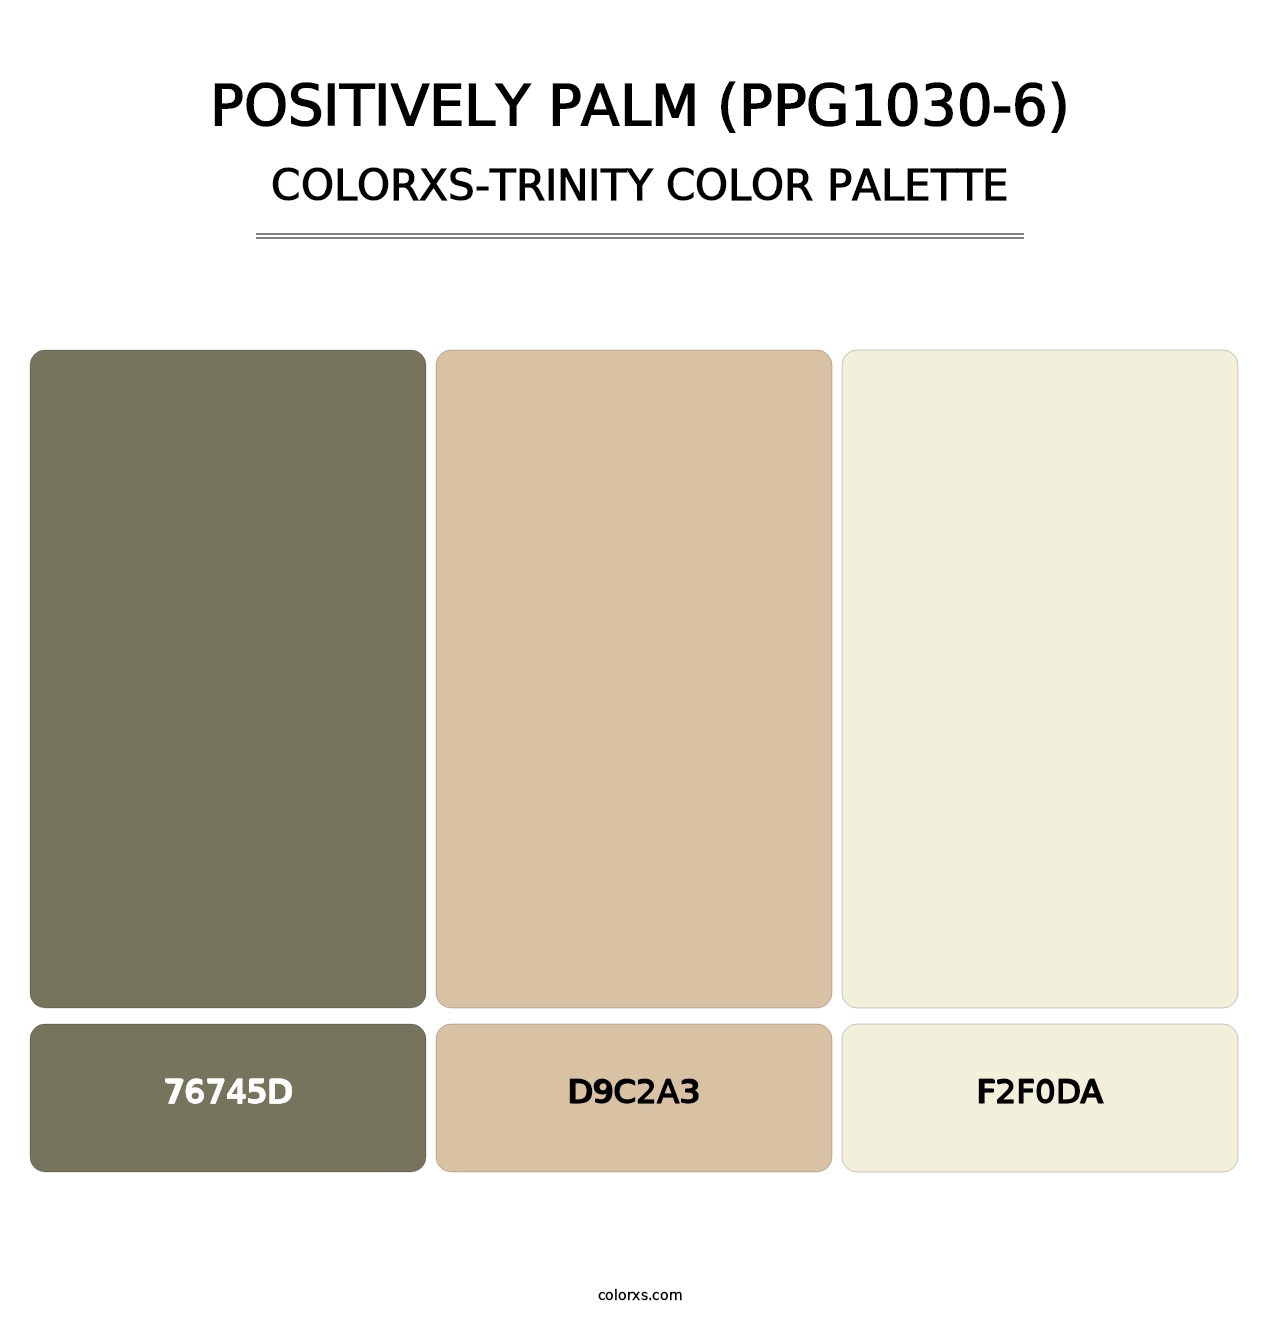 Positively Palm (PPG1030-6) - Colorxs Trinity Palette